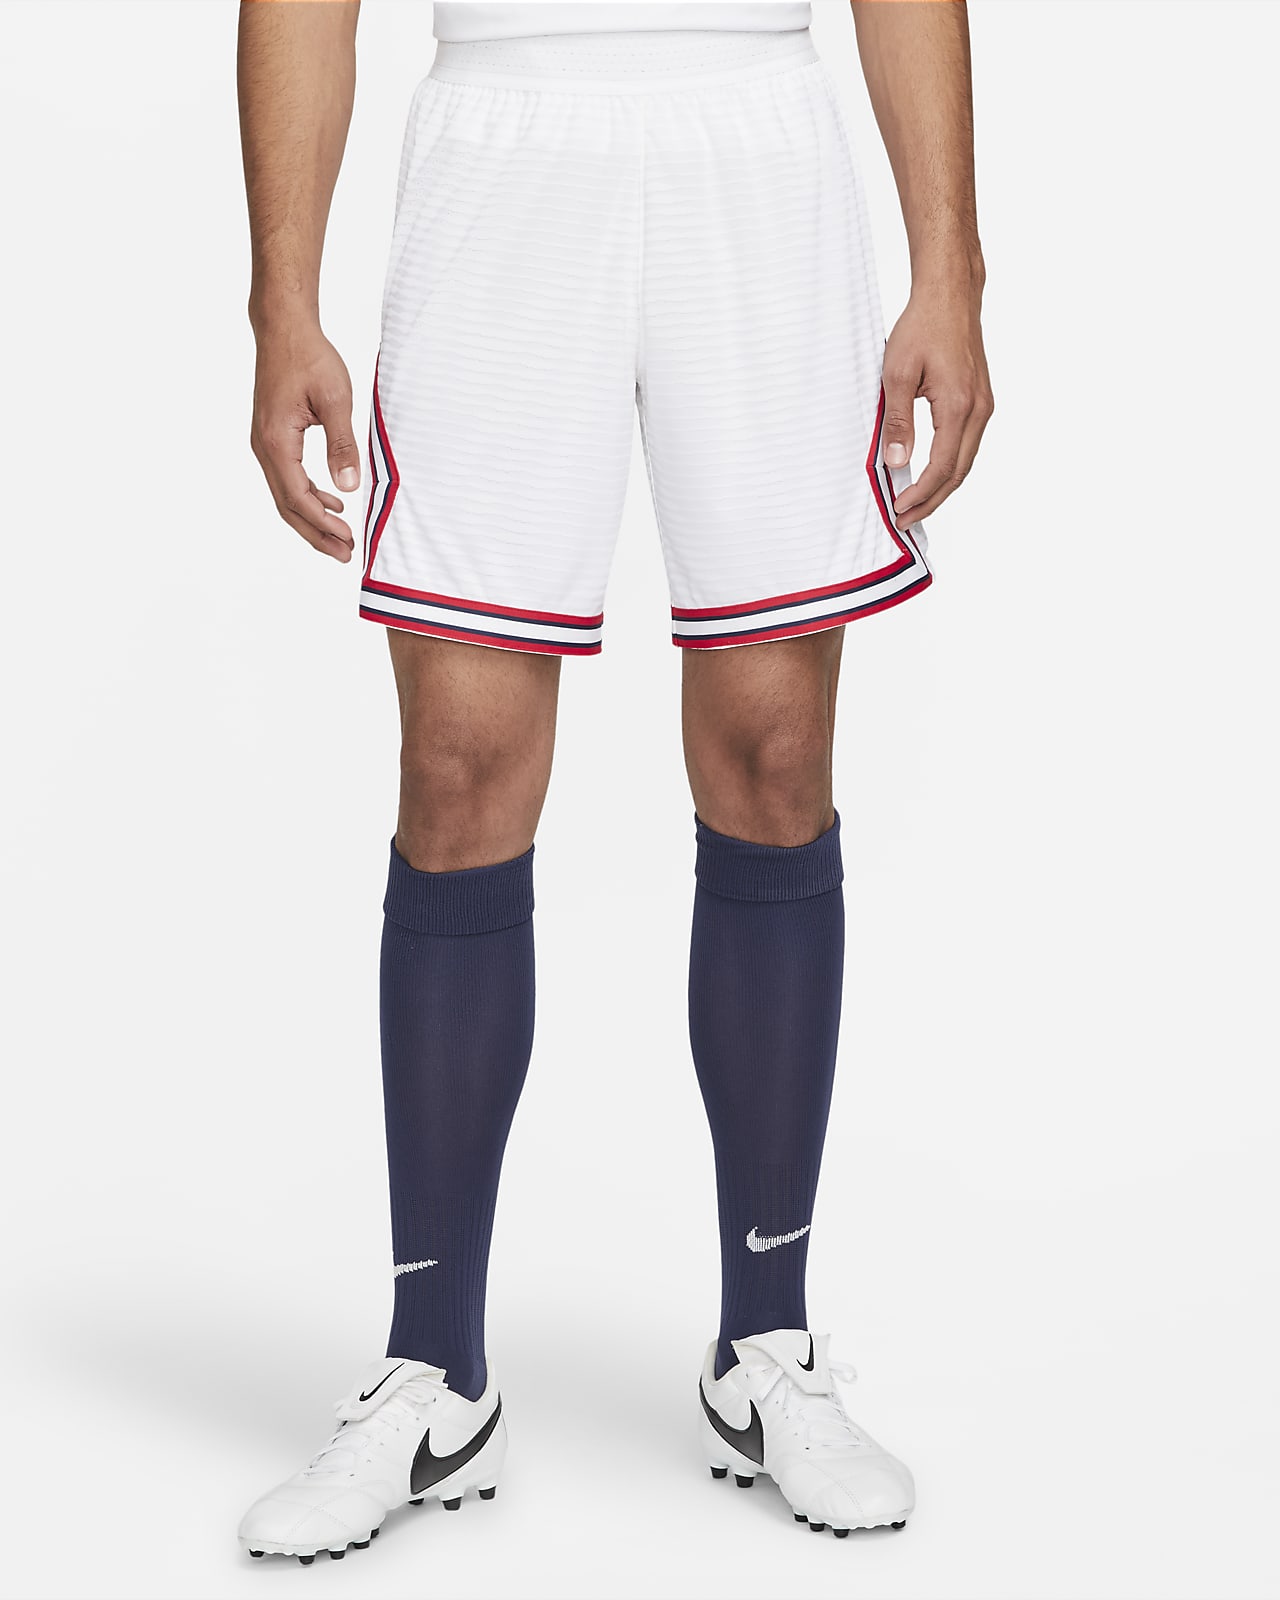 Cuarta equipación Match París Saint-Germain 2022/23 Pantalón corto de fútbol Nike Dri-FIT ADV - Hombre